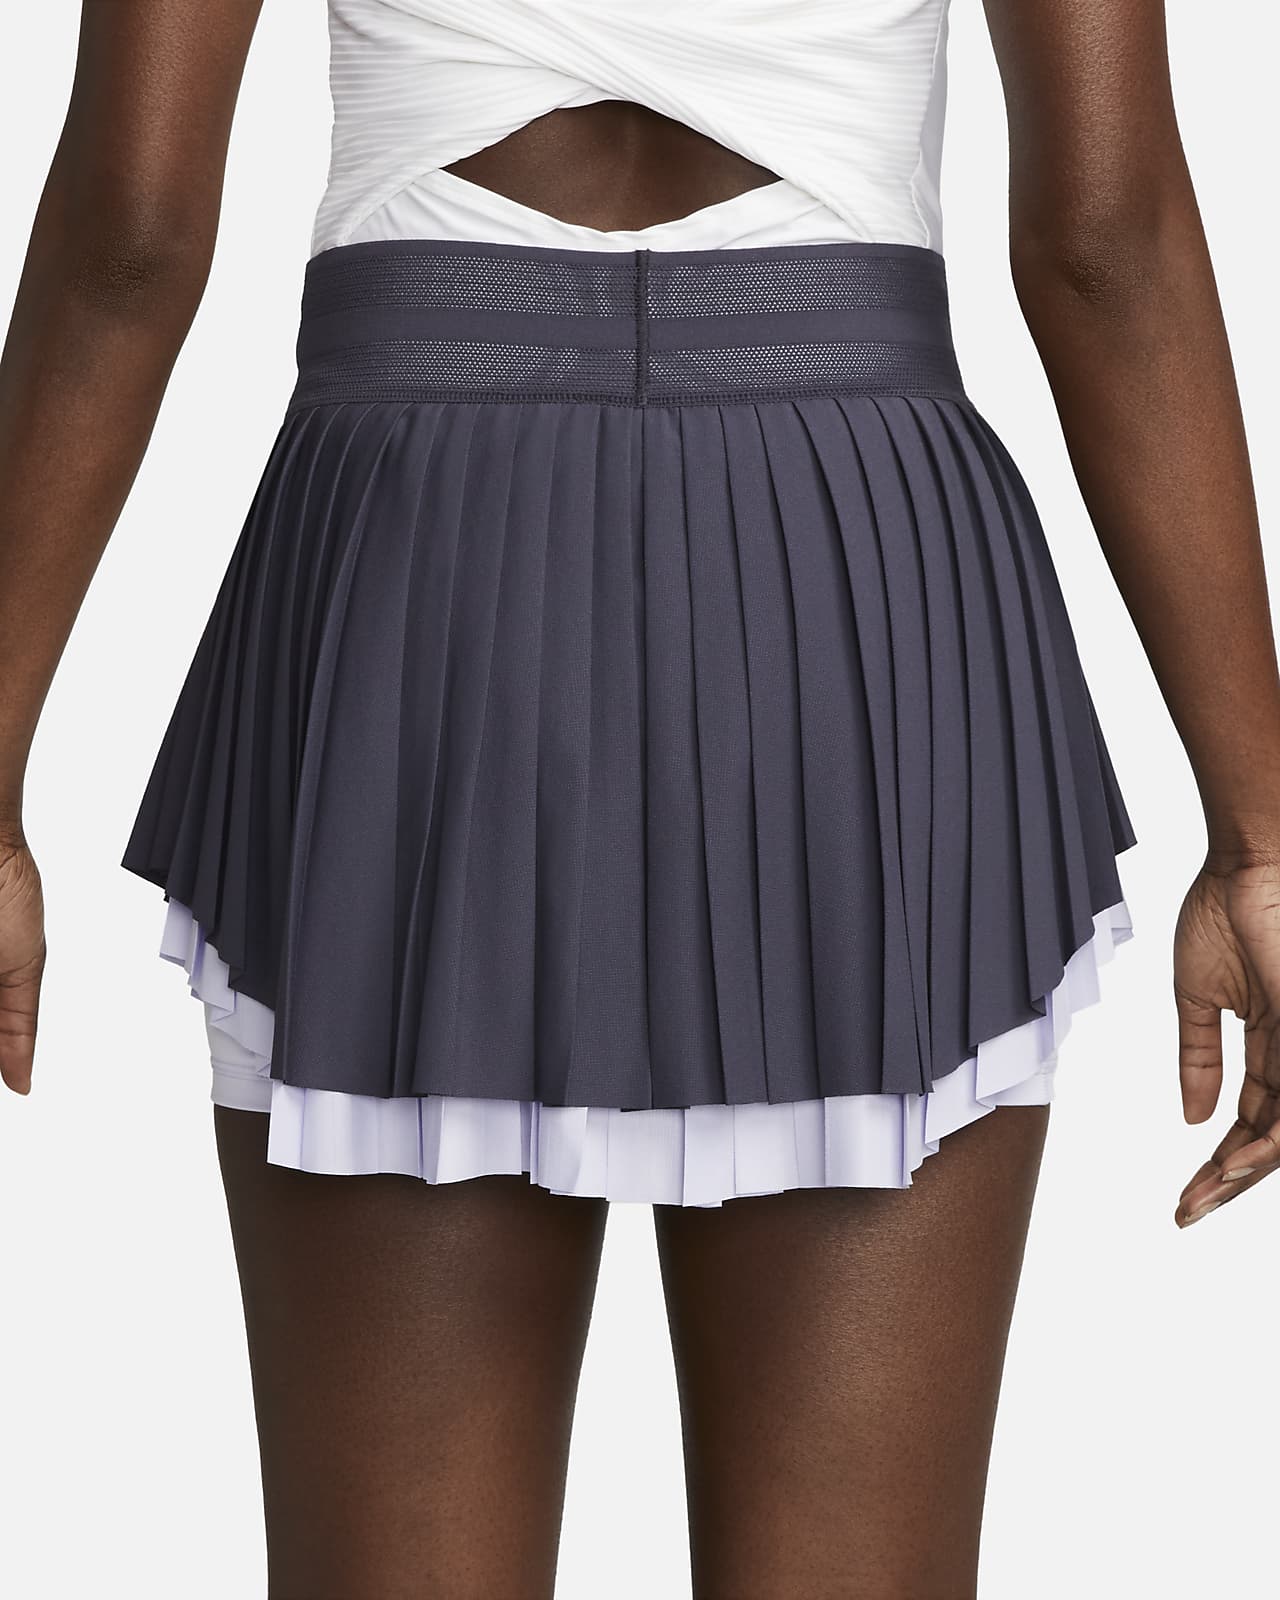 NikeCourt Dri-FIT Slam Women's Tennis Skirt